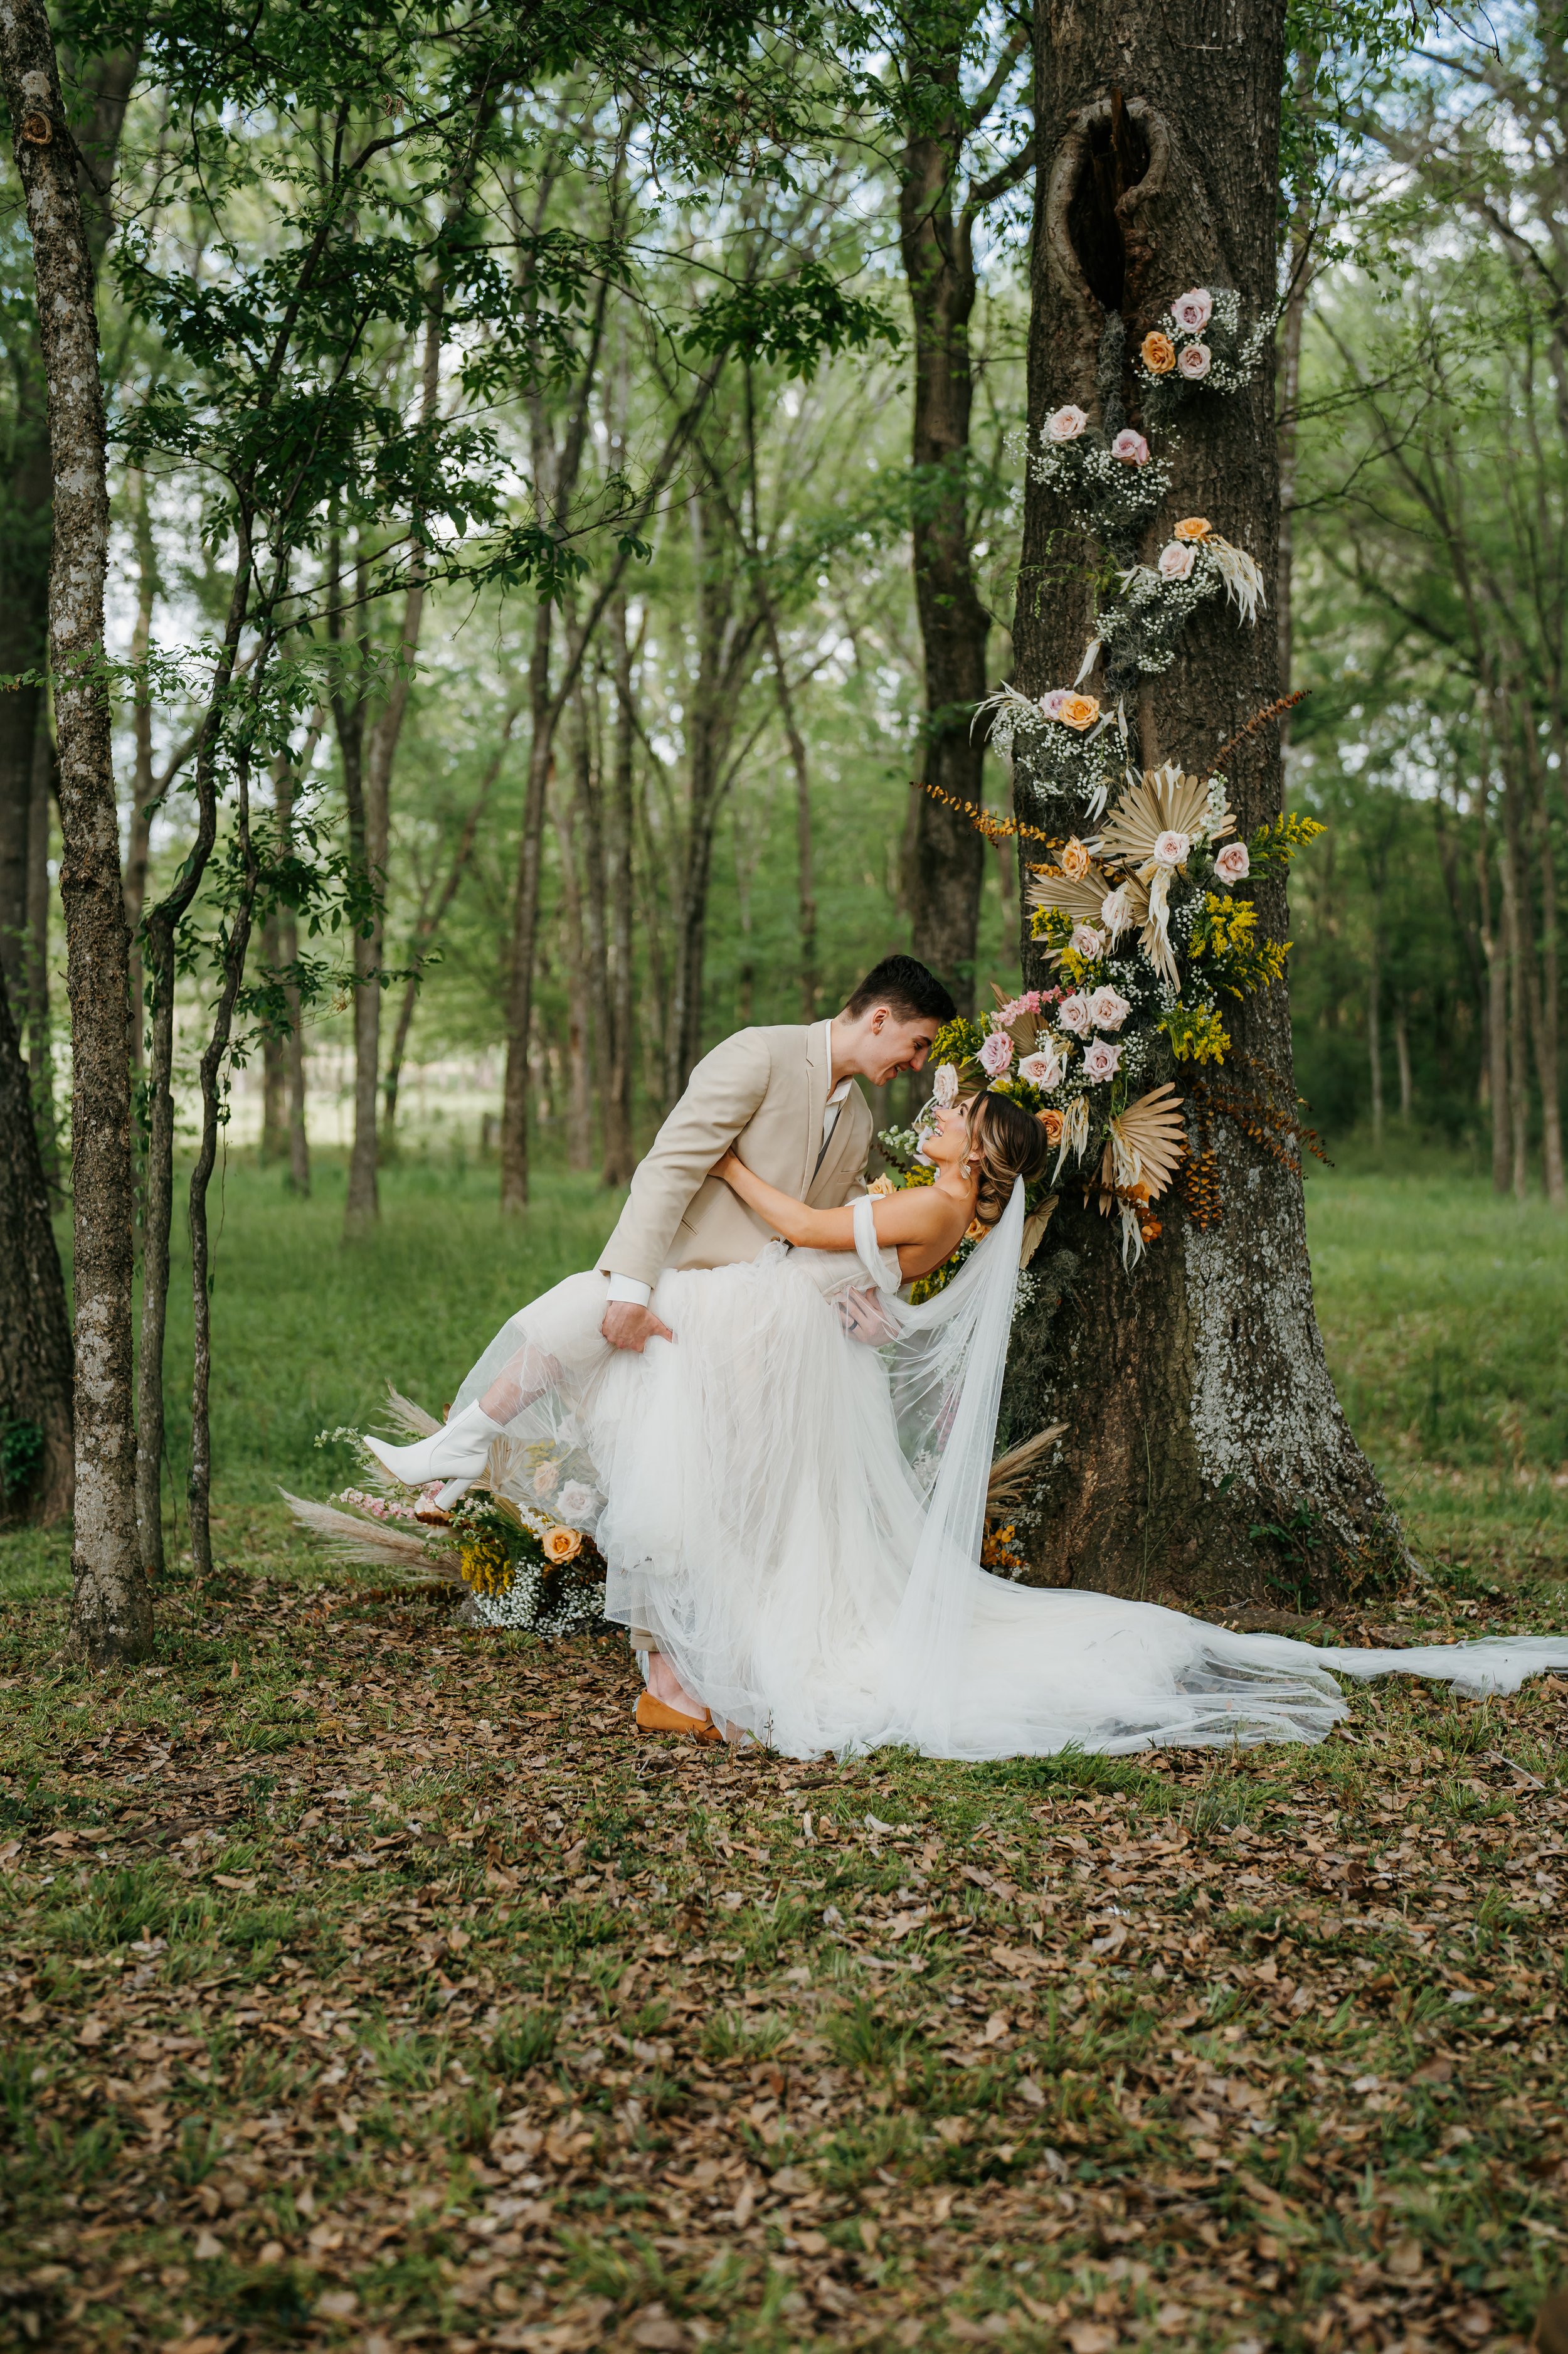 romantic aline wedding dress in a fairy garden styled wedding